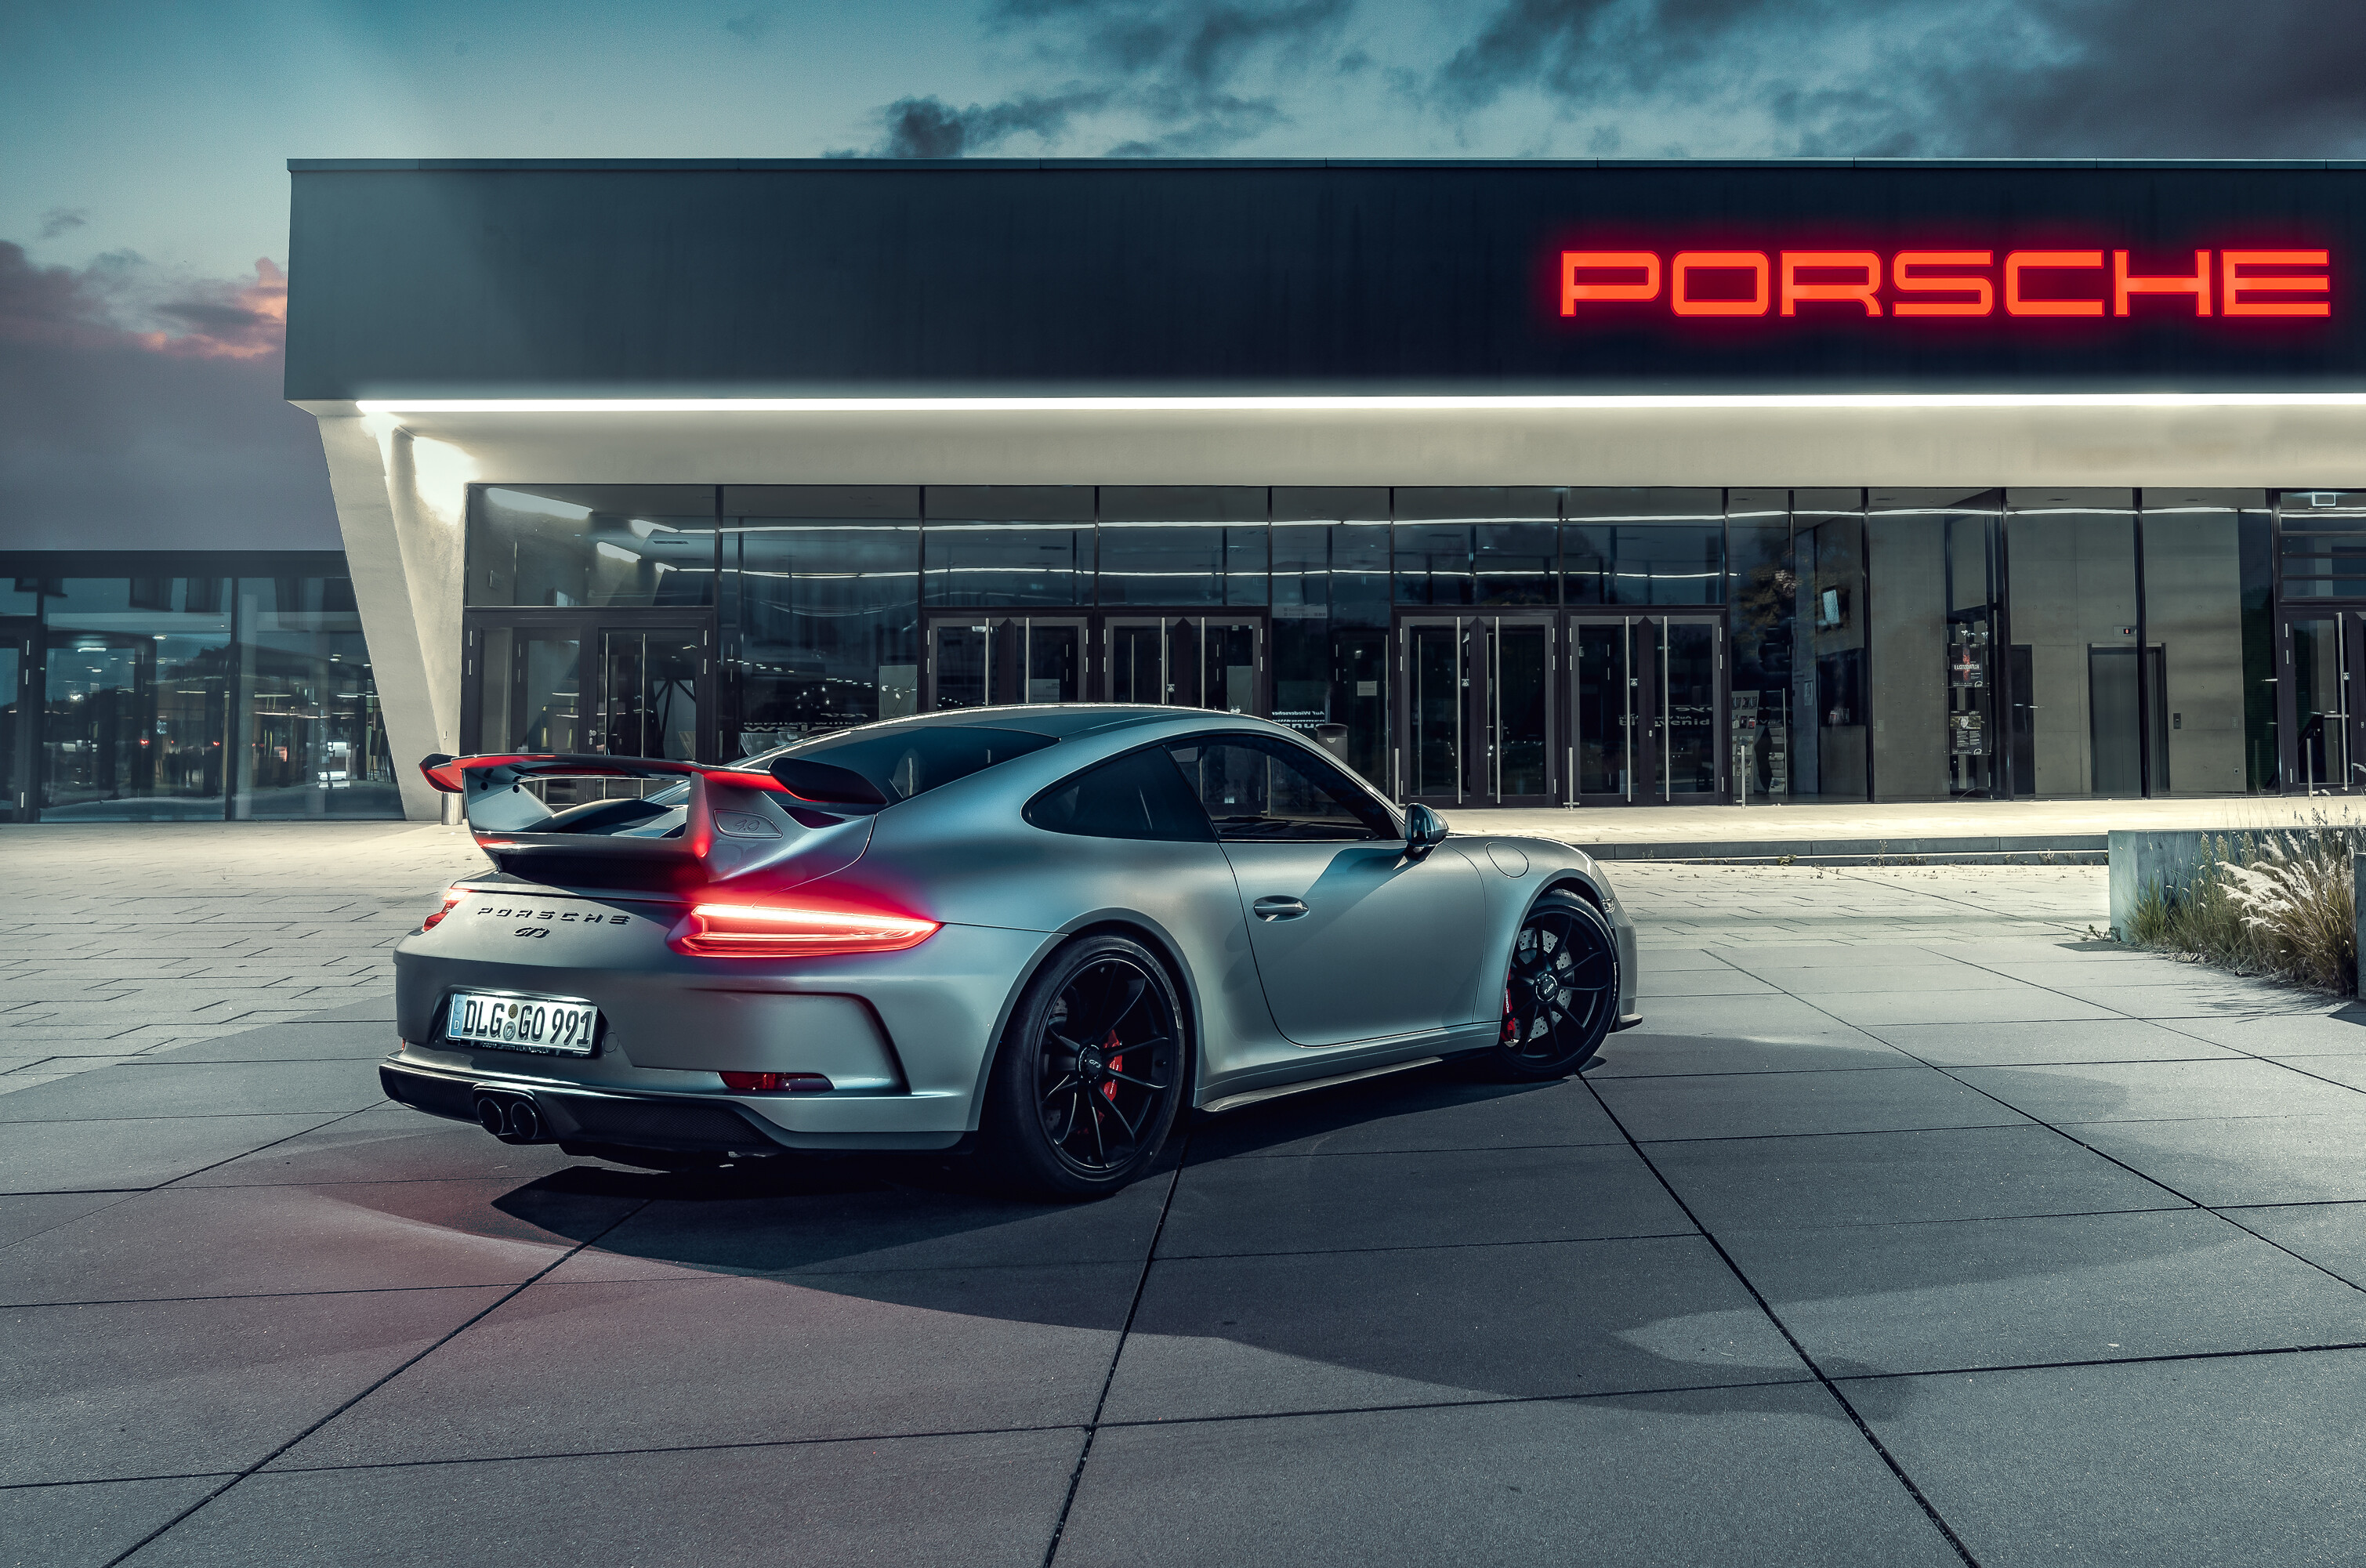 Porsche GT3, Rear view in 4K, HD cars wallpapers, Stunning images, 3020x2010 HD Desktop